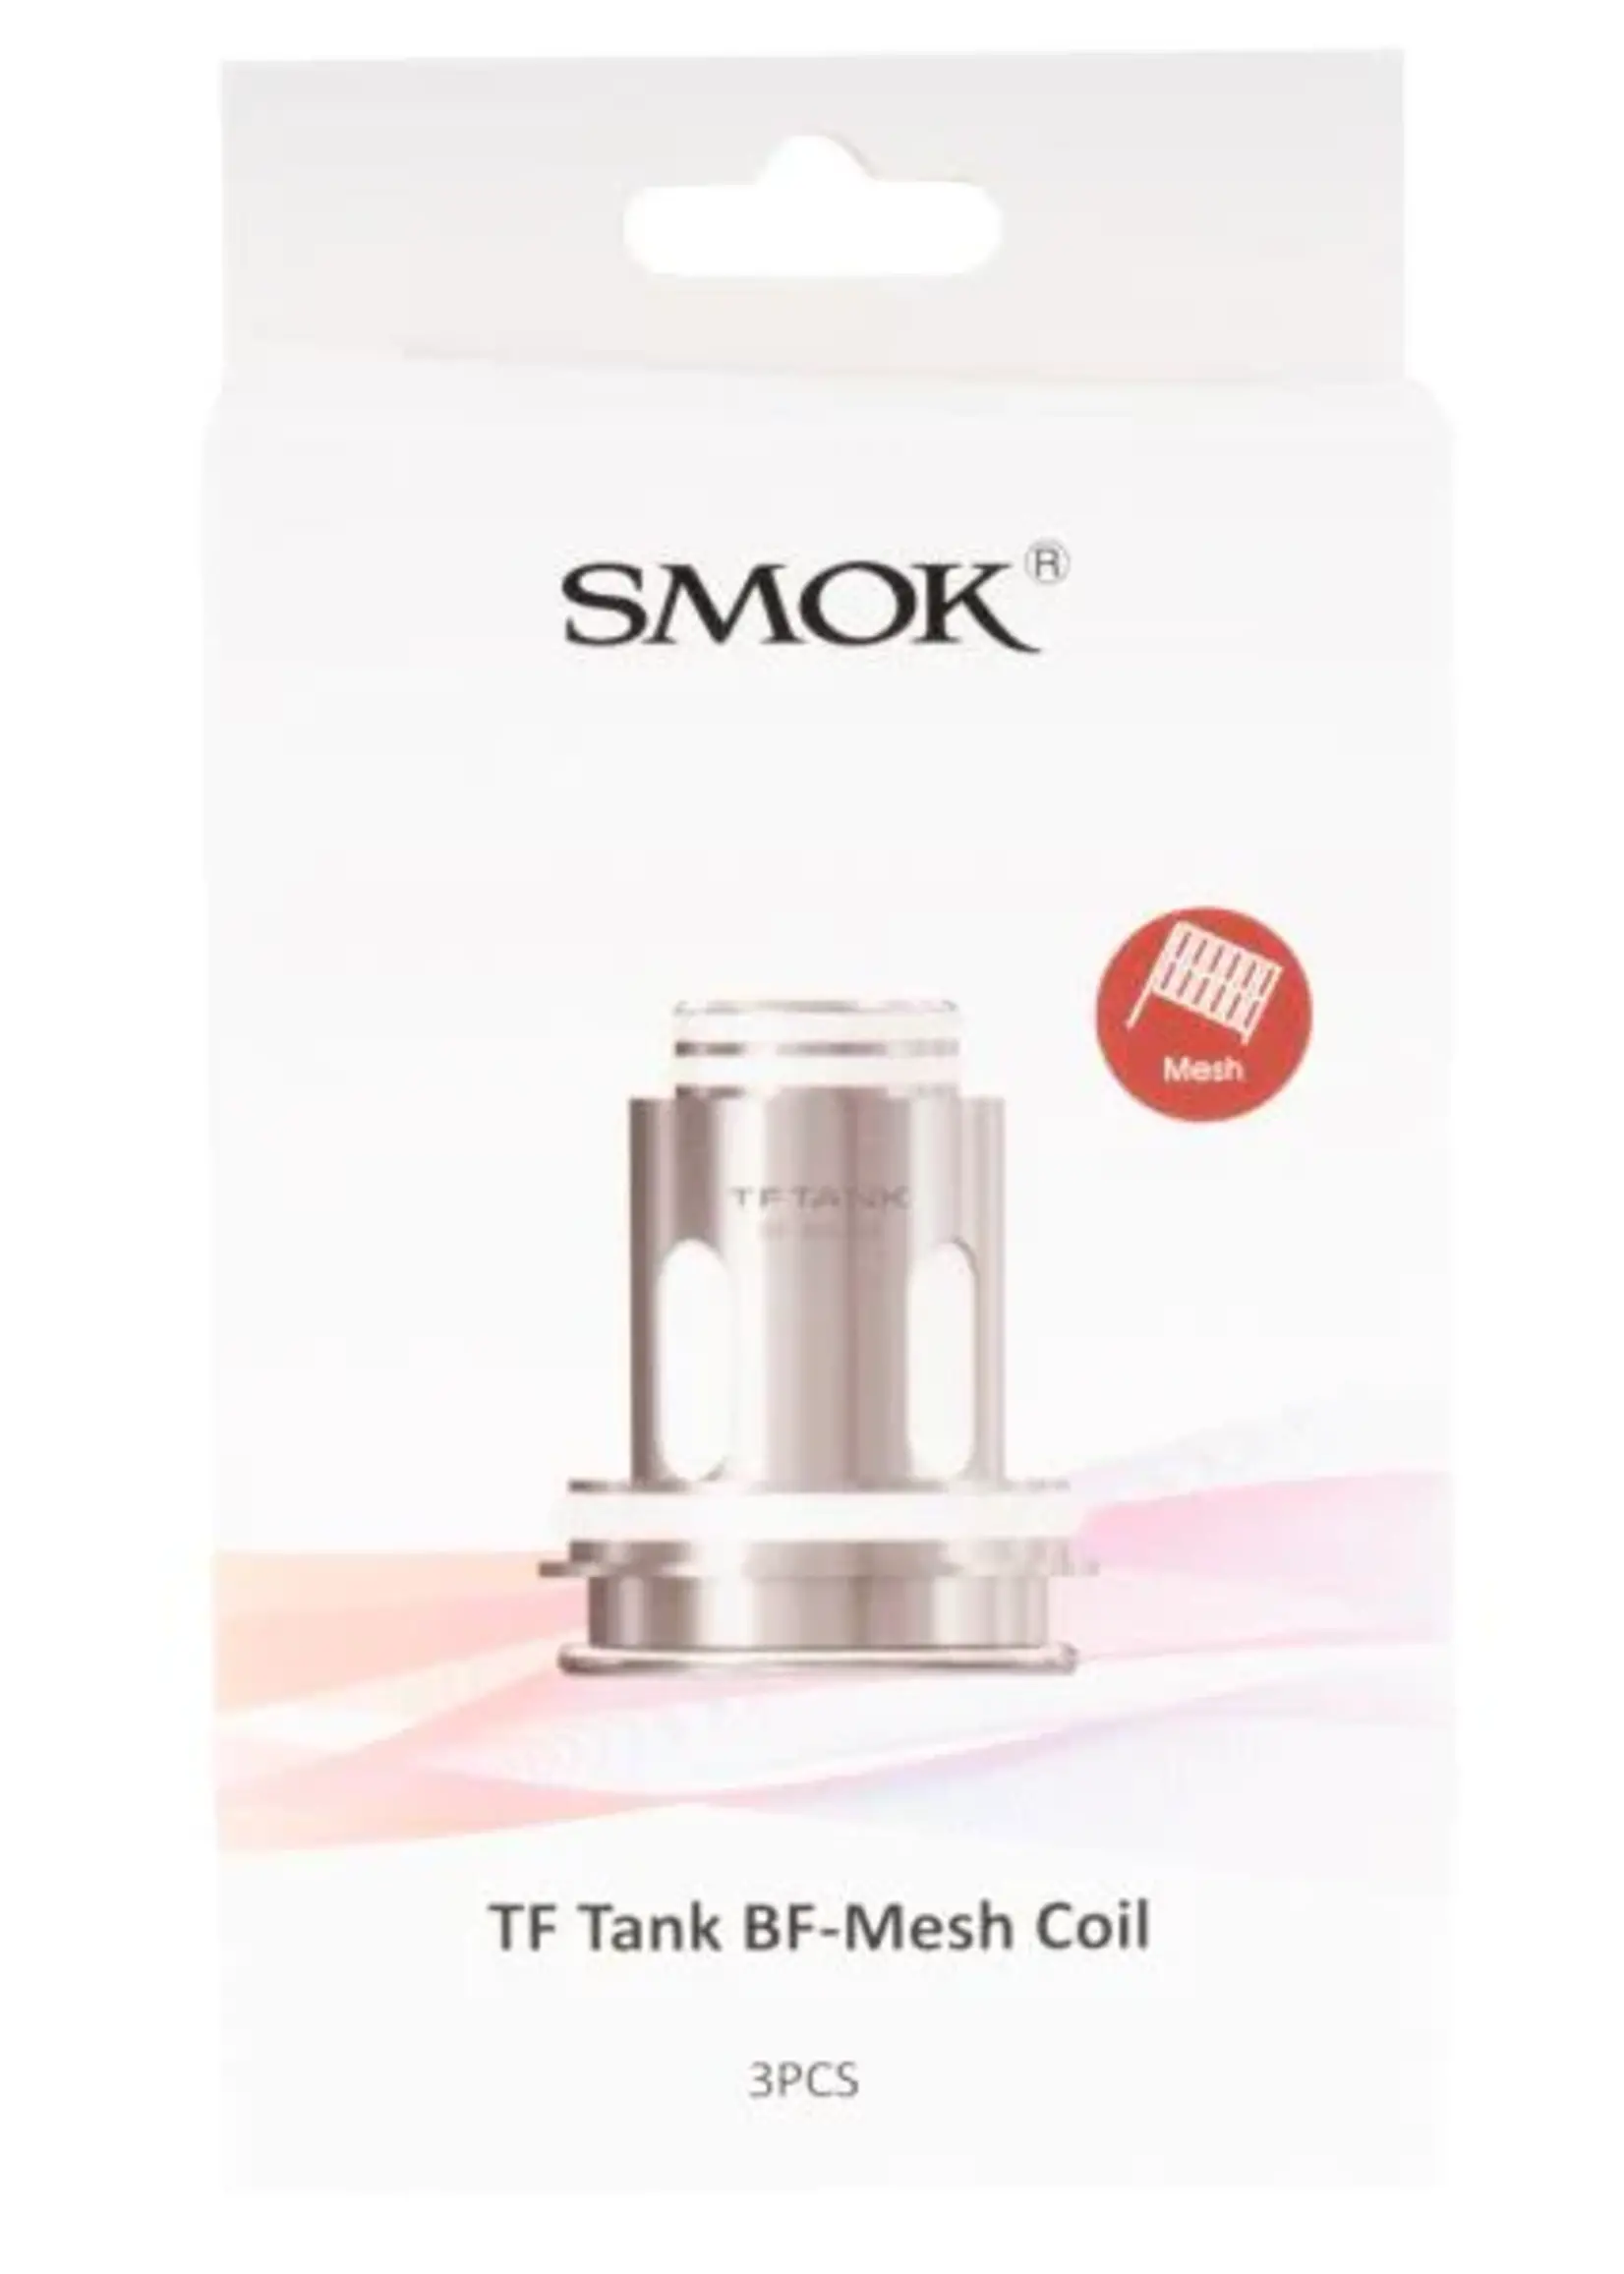 Smok Smok TF2019 Sub-Ohm Tank Replacement Coils - Pack Of 3  - 0.25 ohm